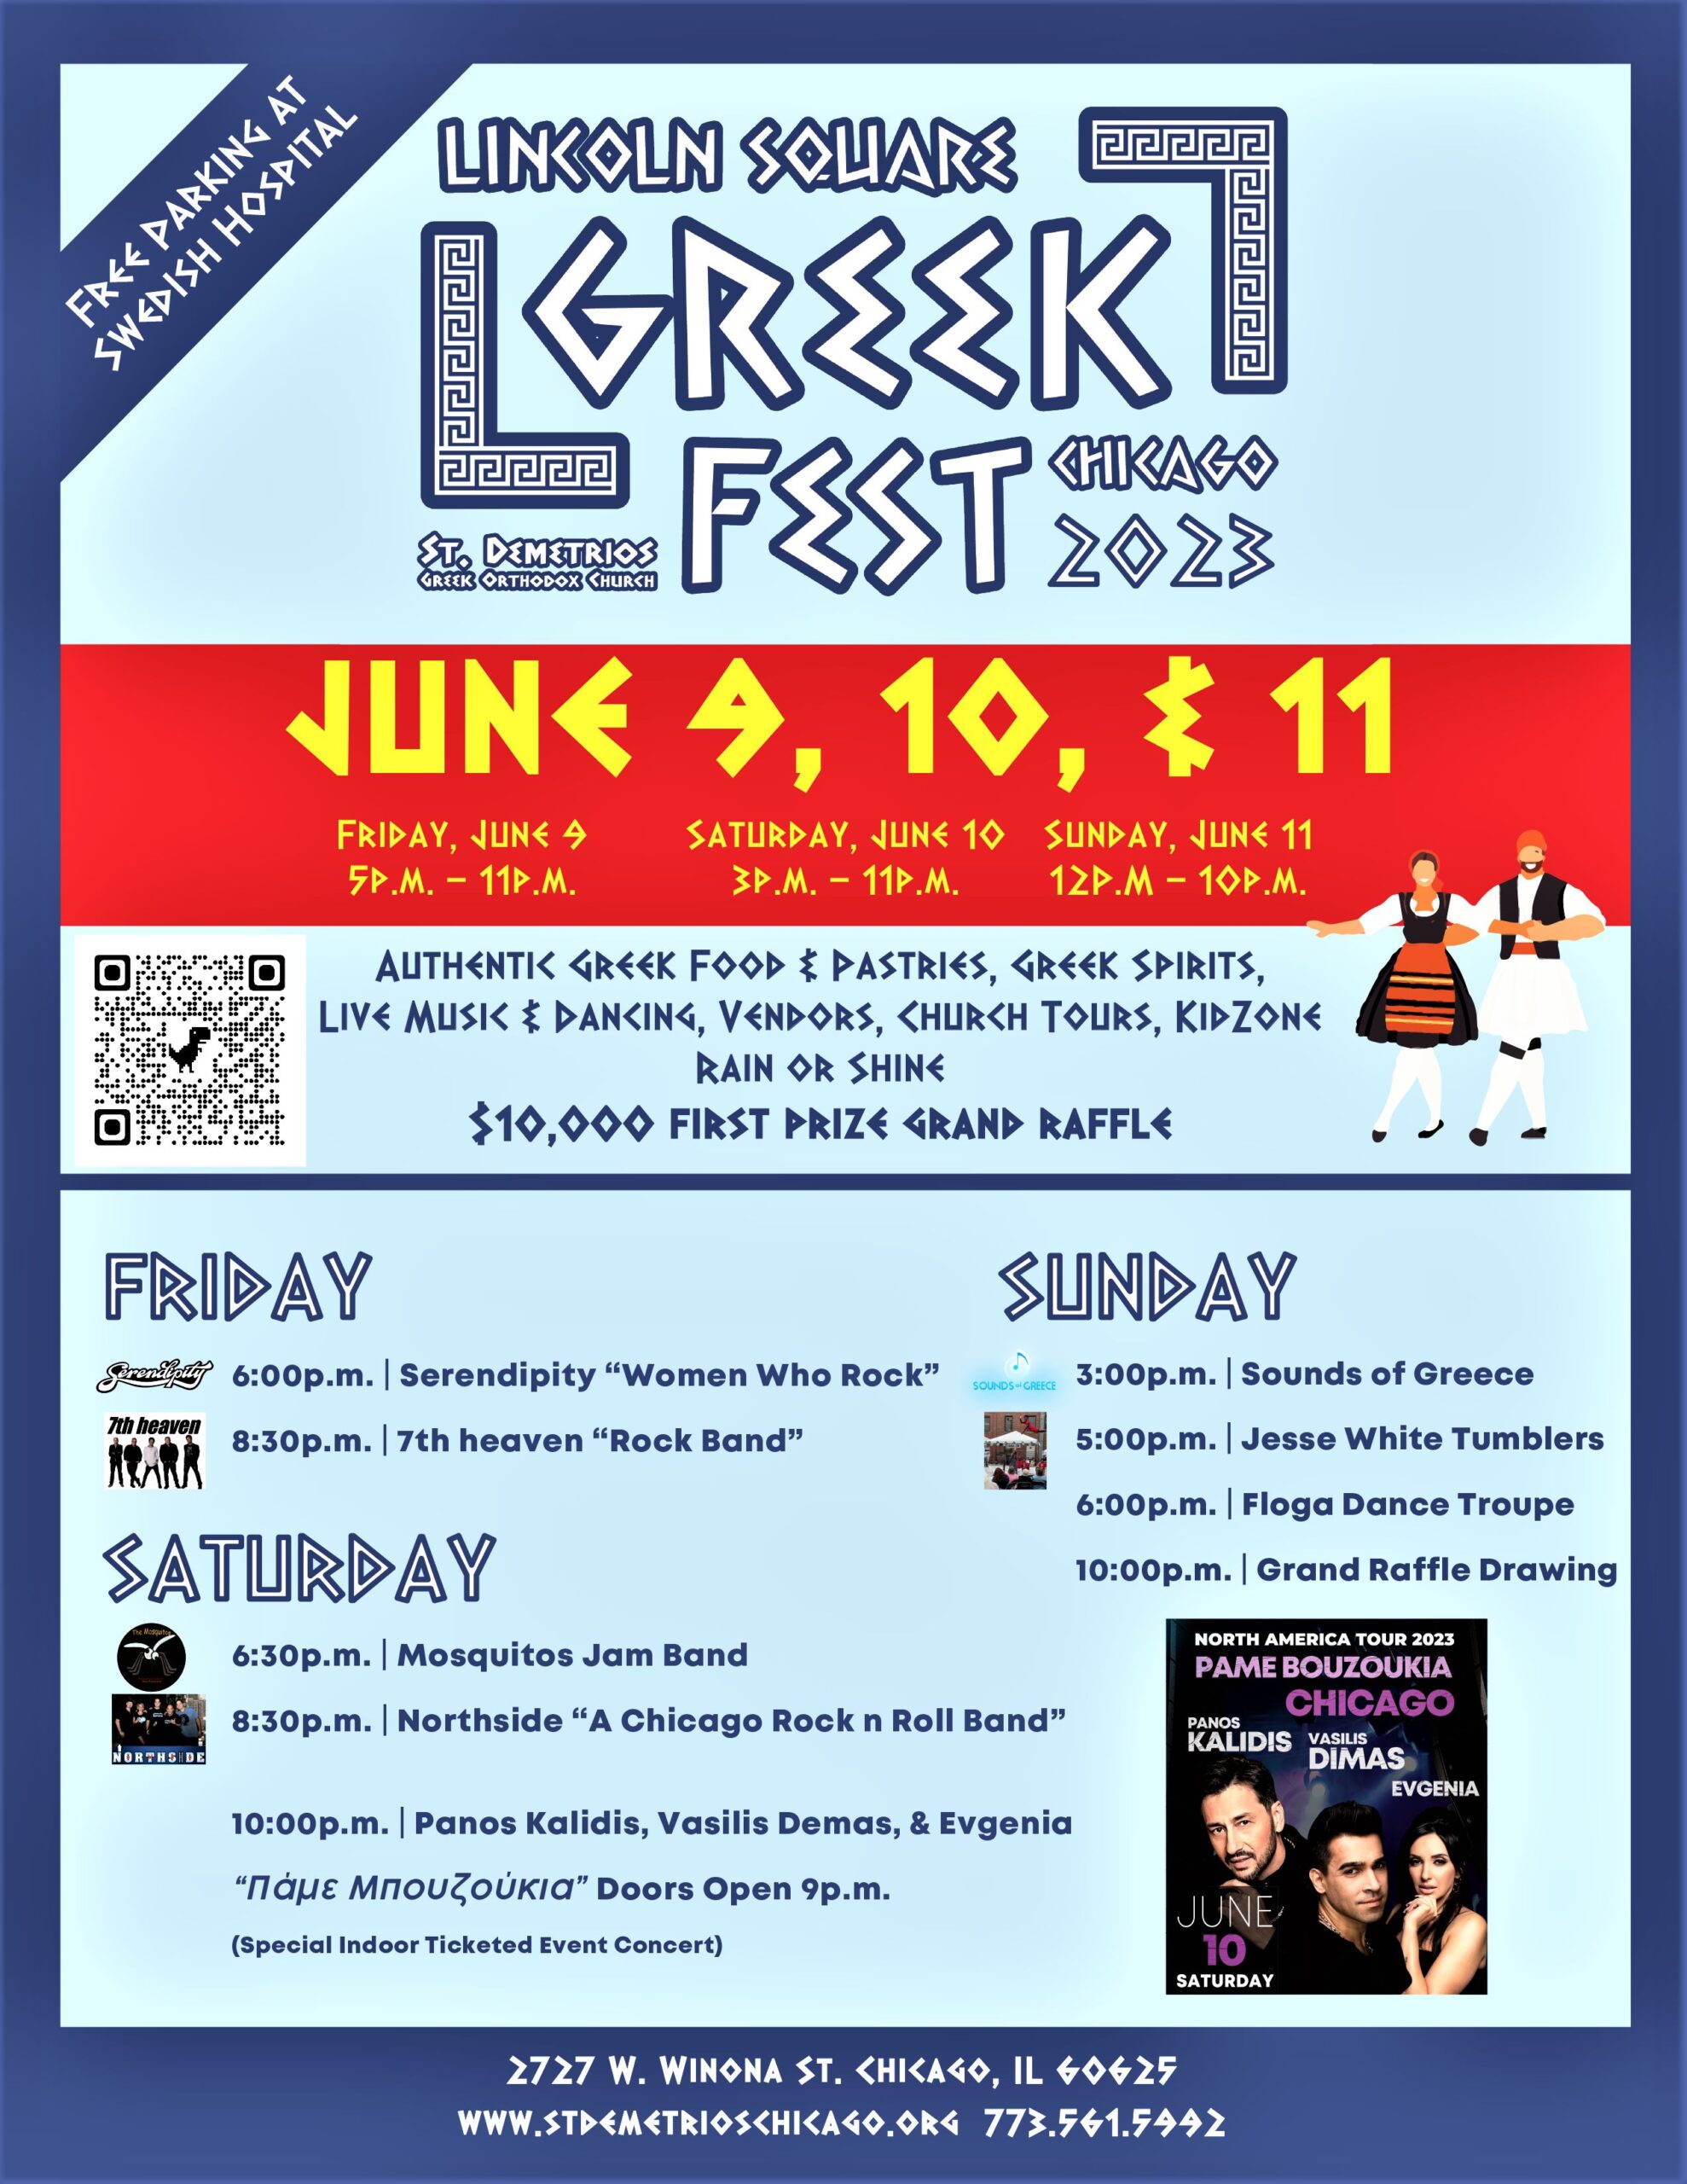 Lincoln Square Greekfest 2023 The Greek Orthodox Metropolis of Chicago